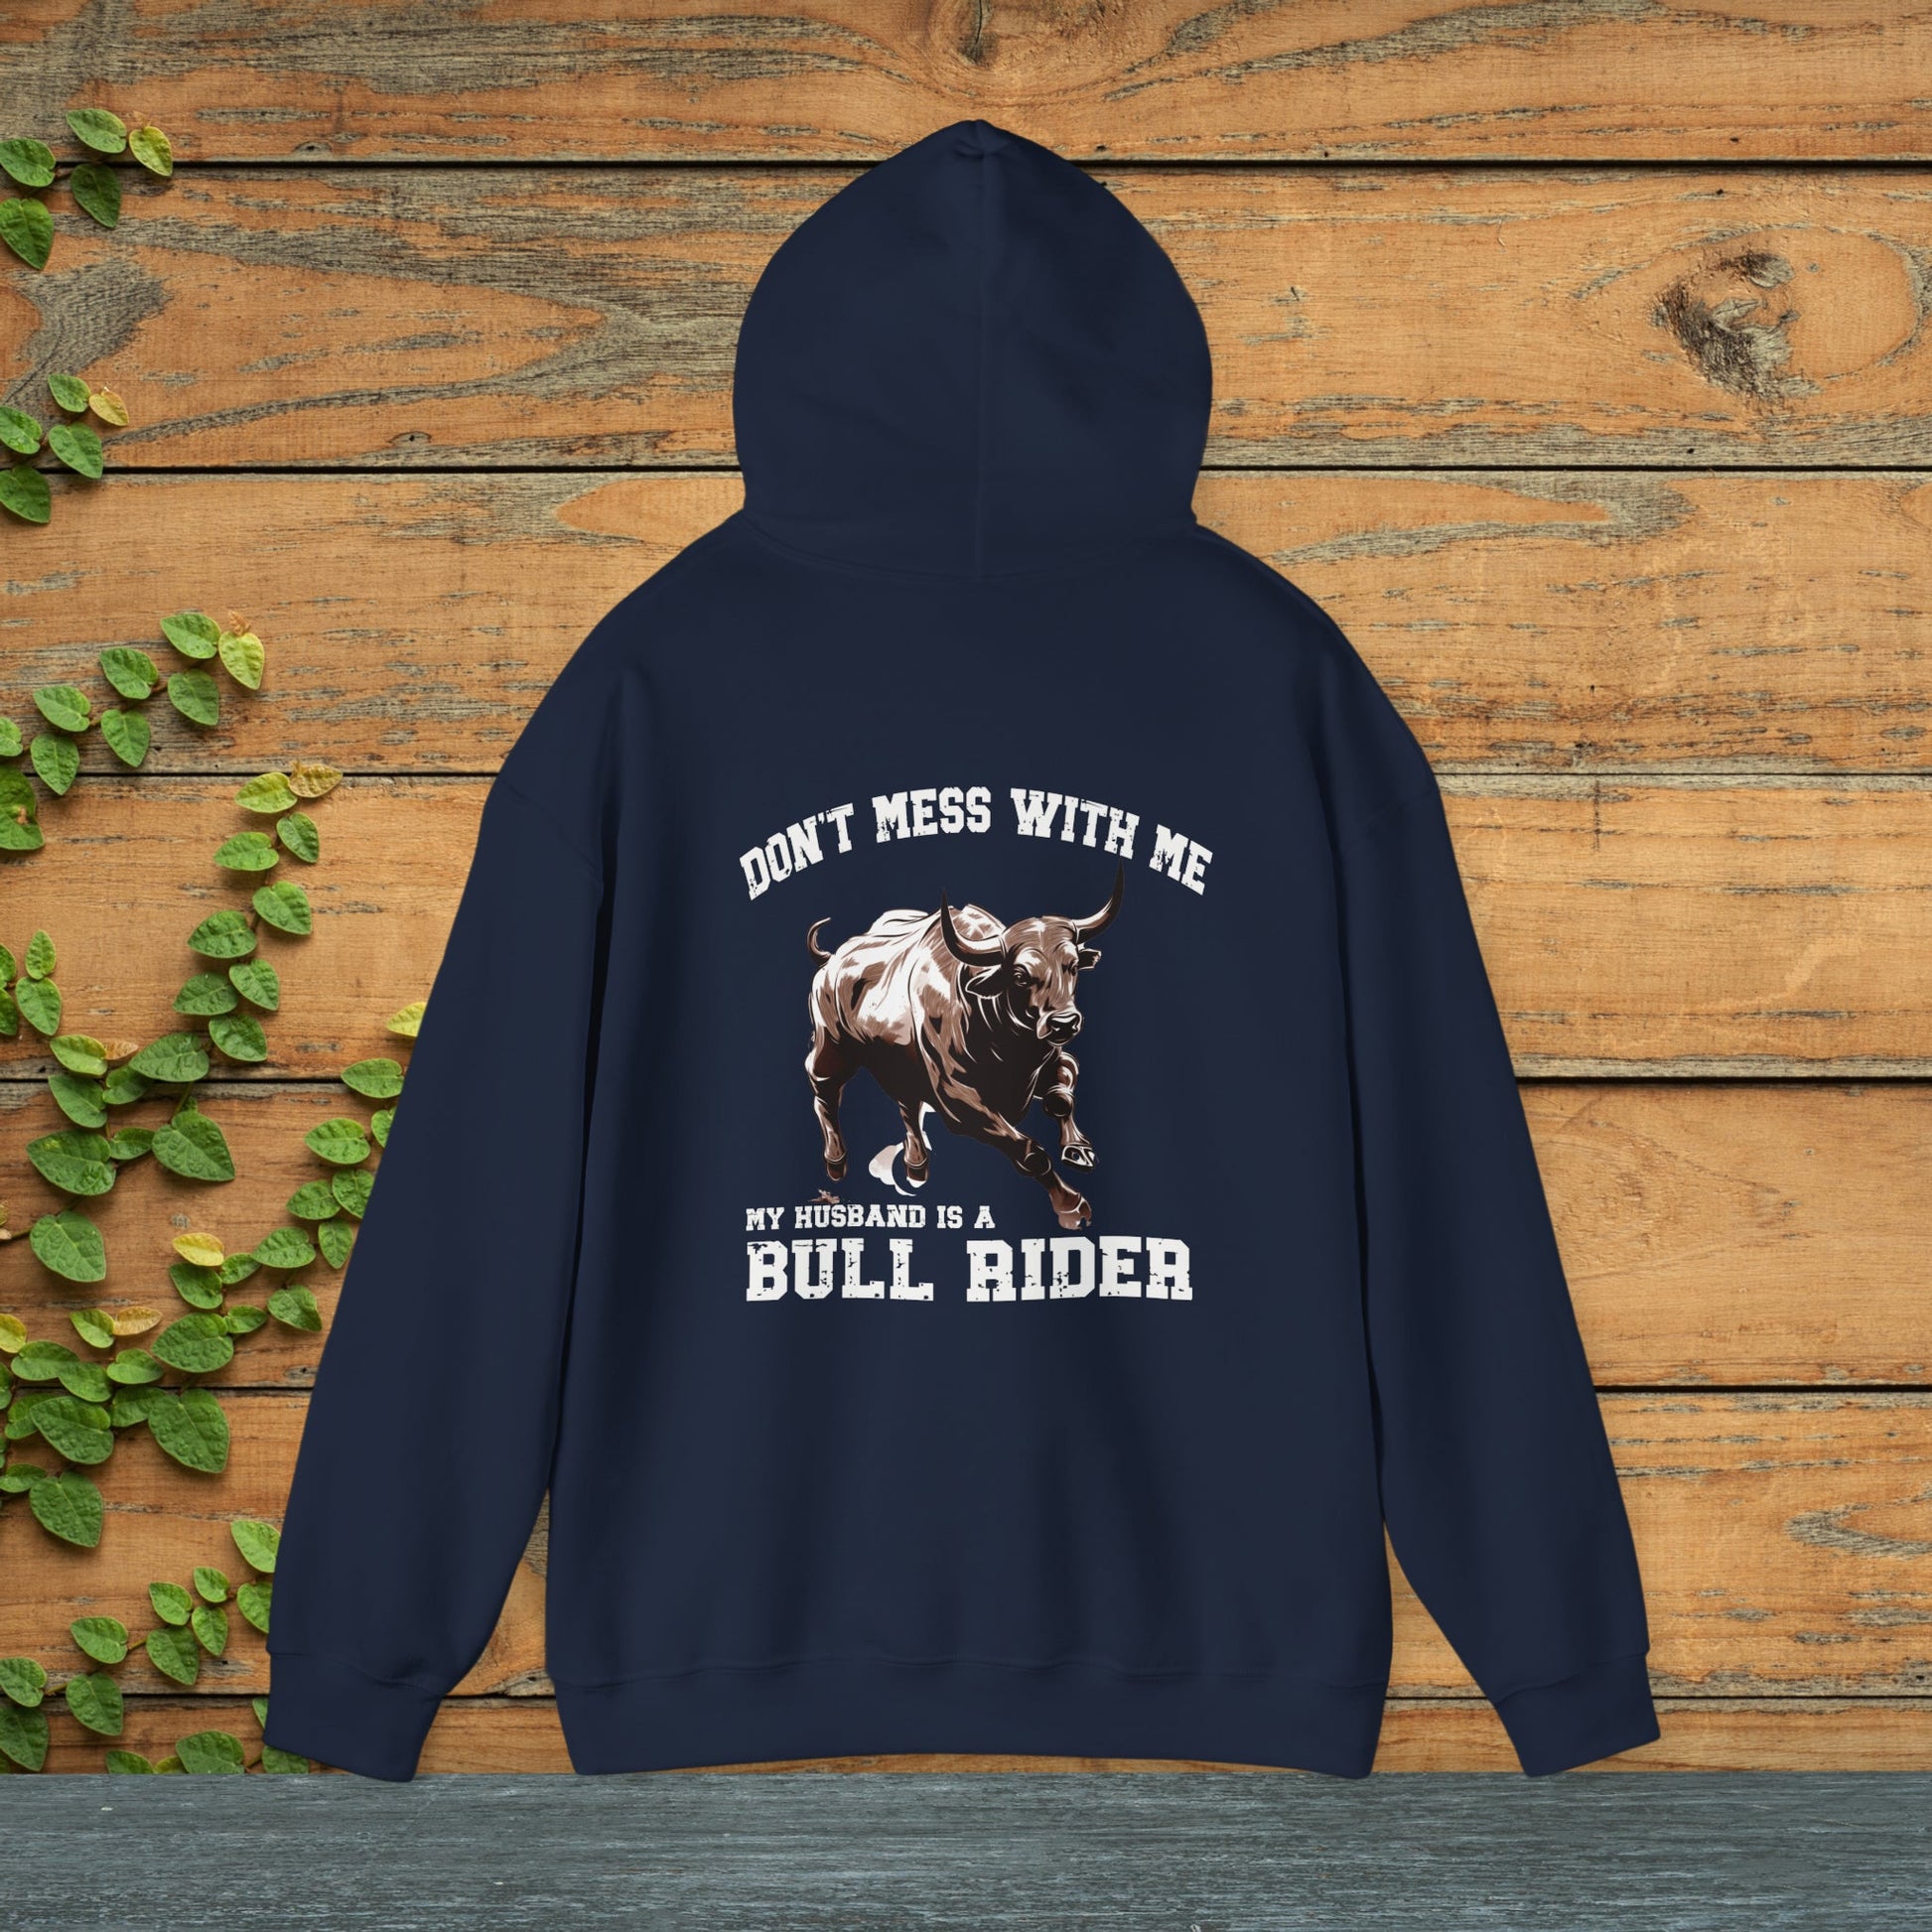 Rodeo Wife Sweatshirt Hoodie, Wife of a Cowboy Bull Rider - FlooredByArt